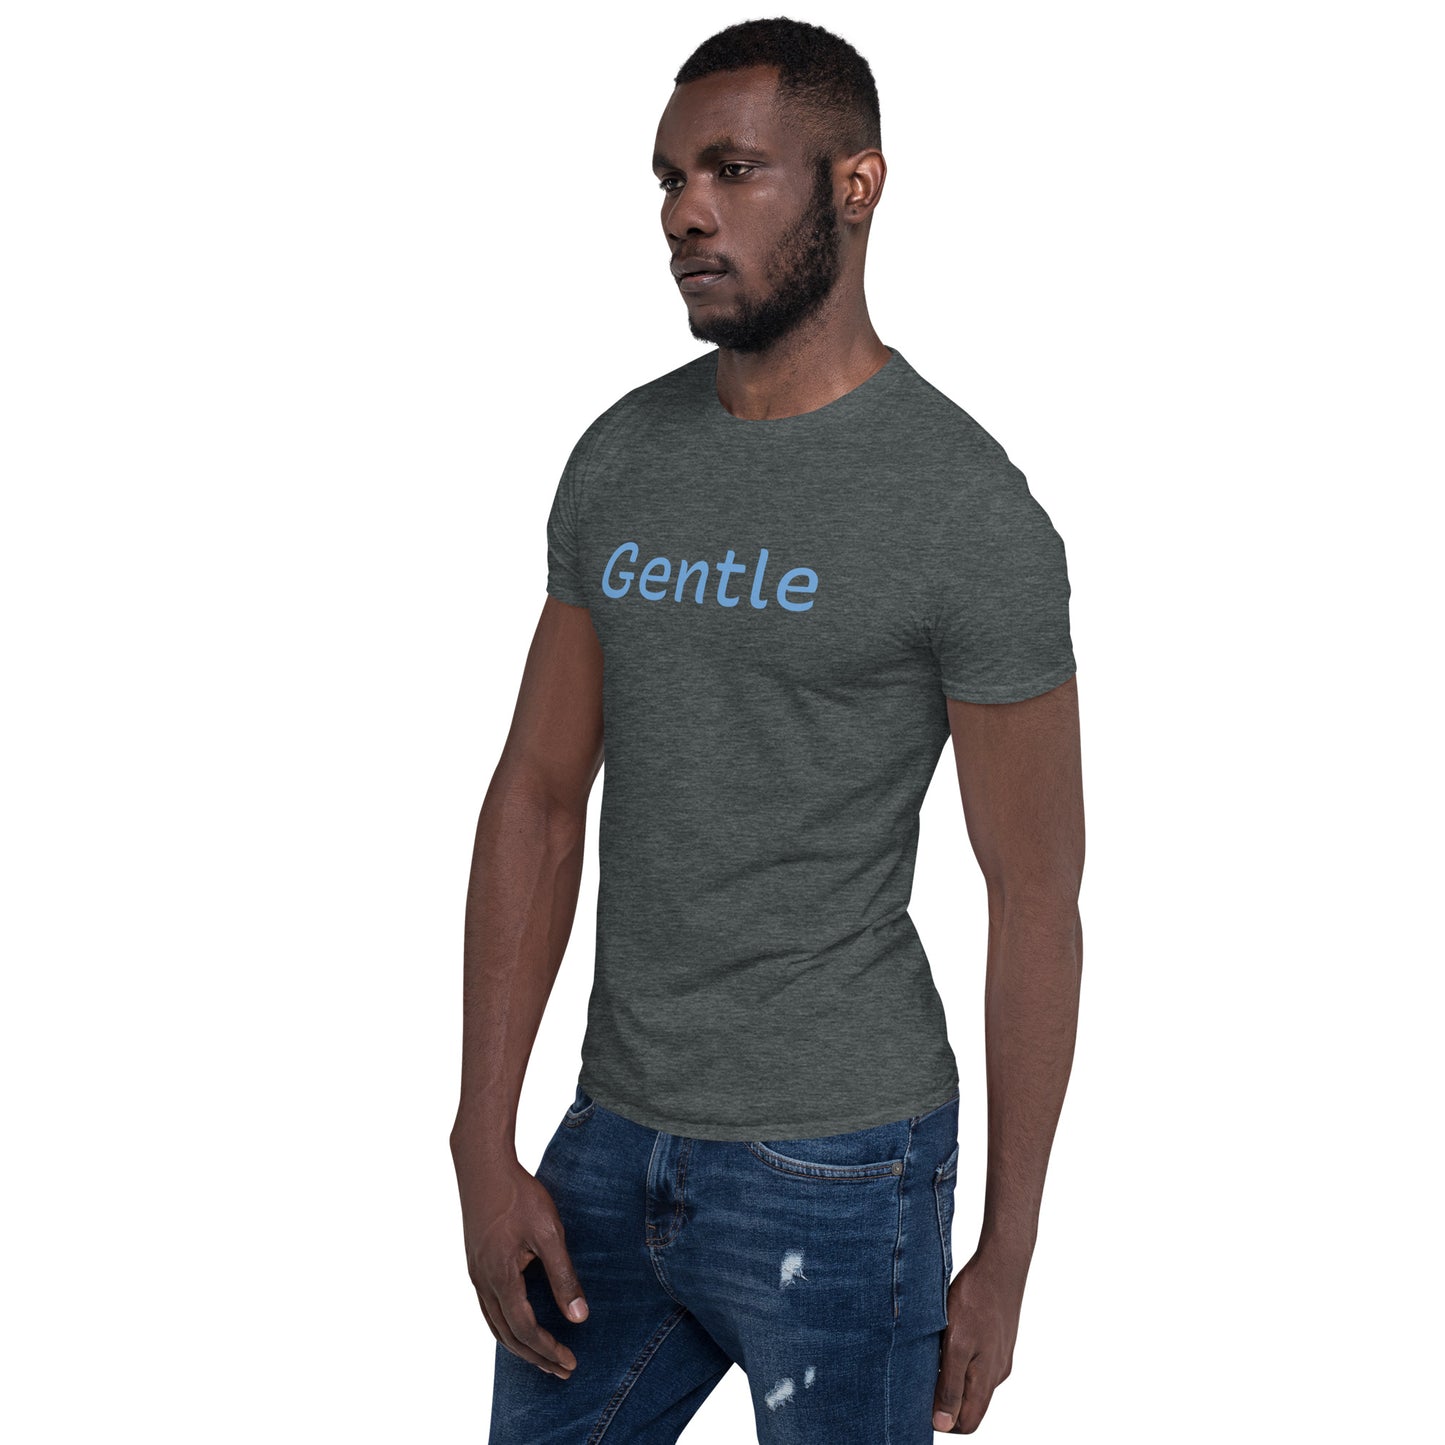 'Gentle' Short-Sleeve Unisex T-Shirt